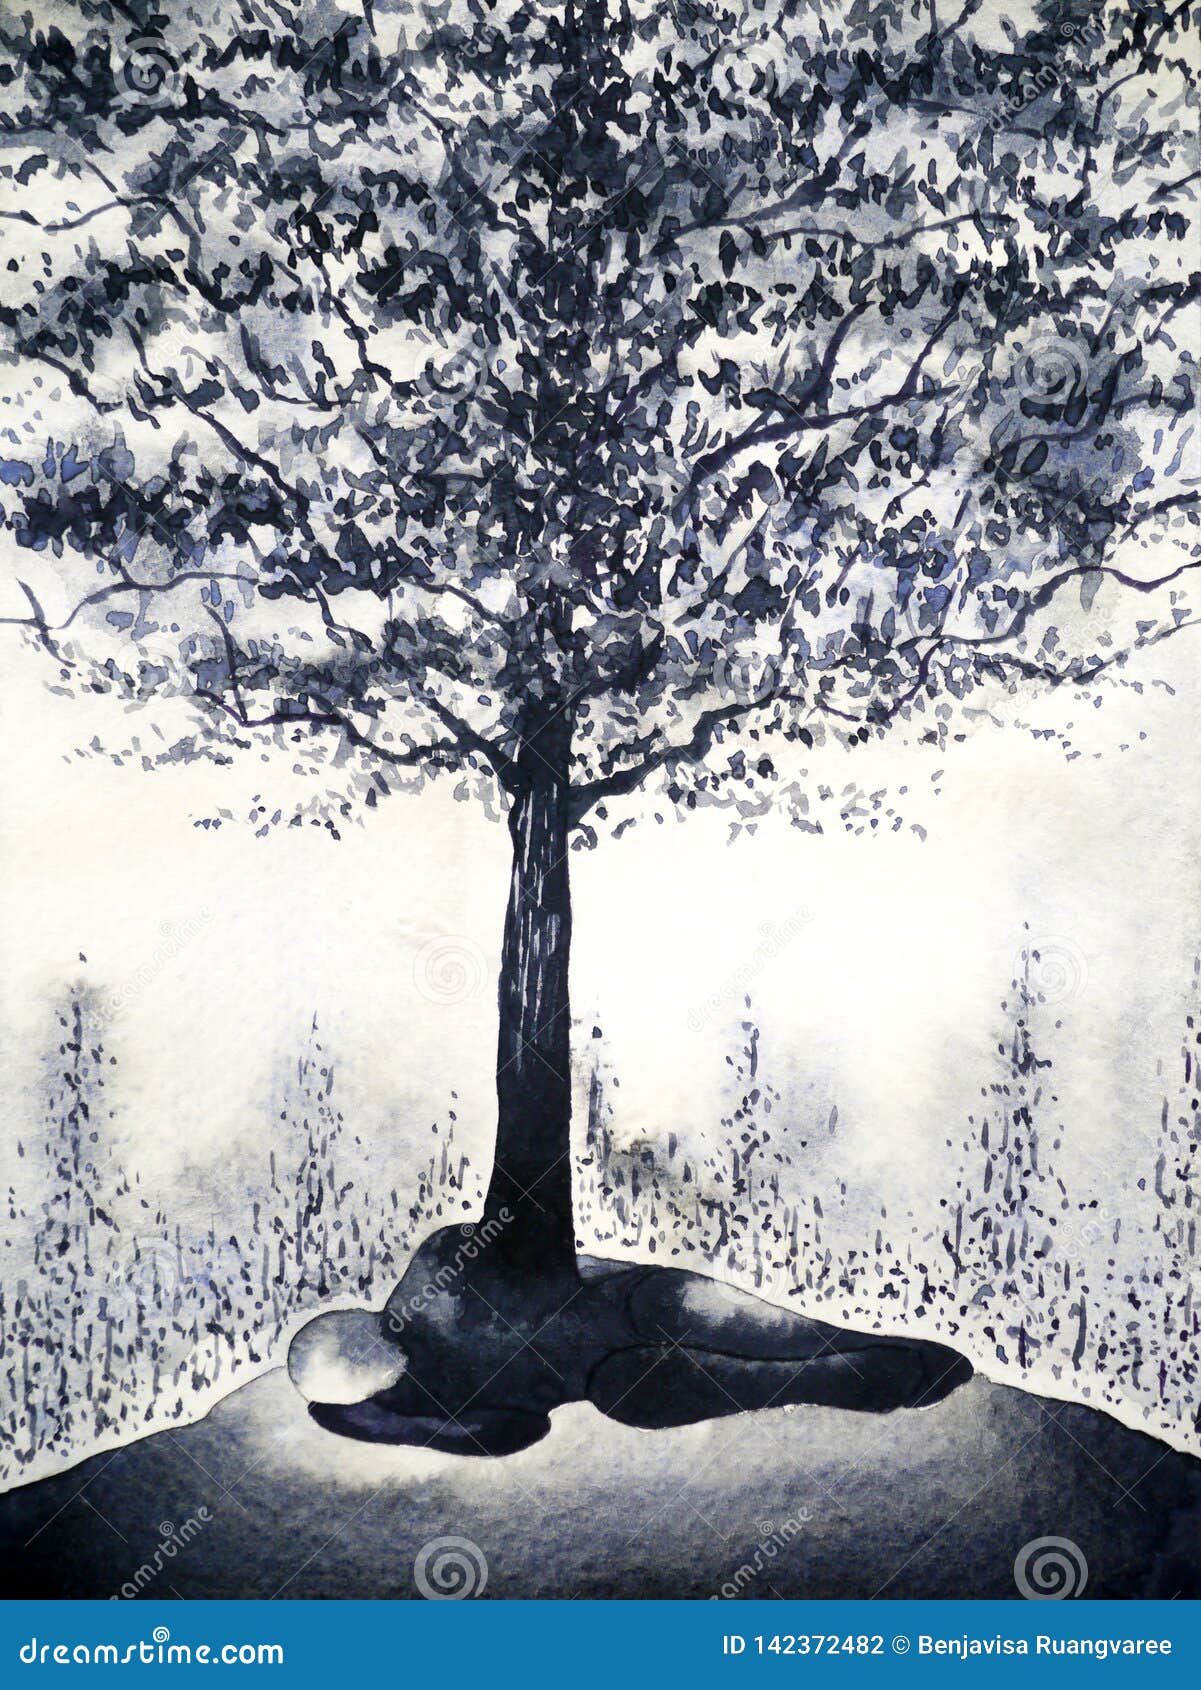 abstract man black tree dead born origin watercolor painting  